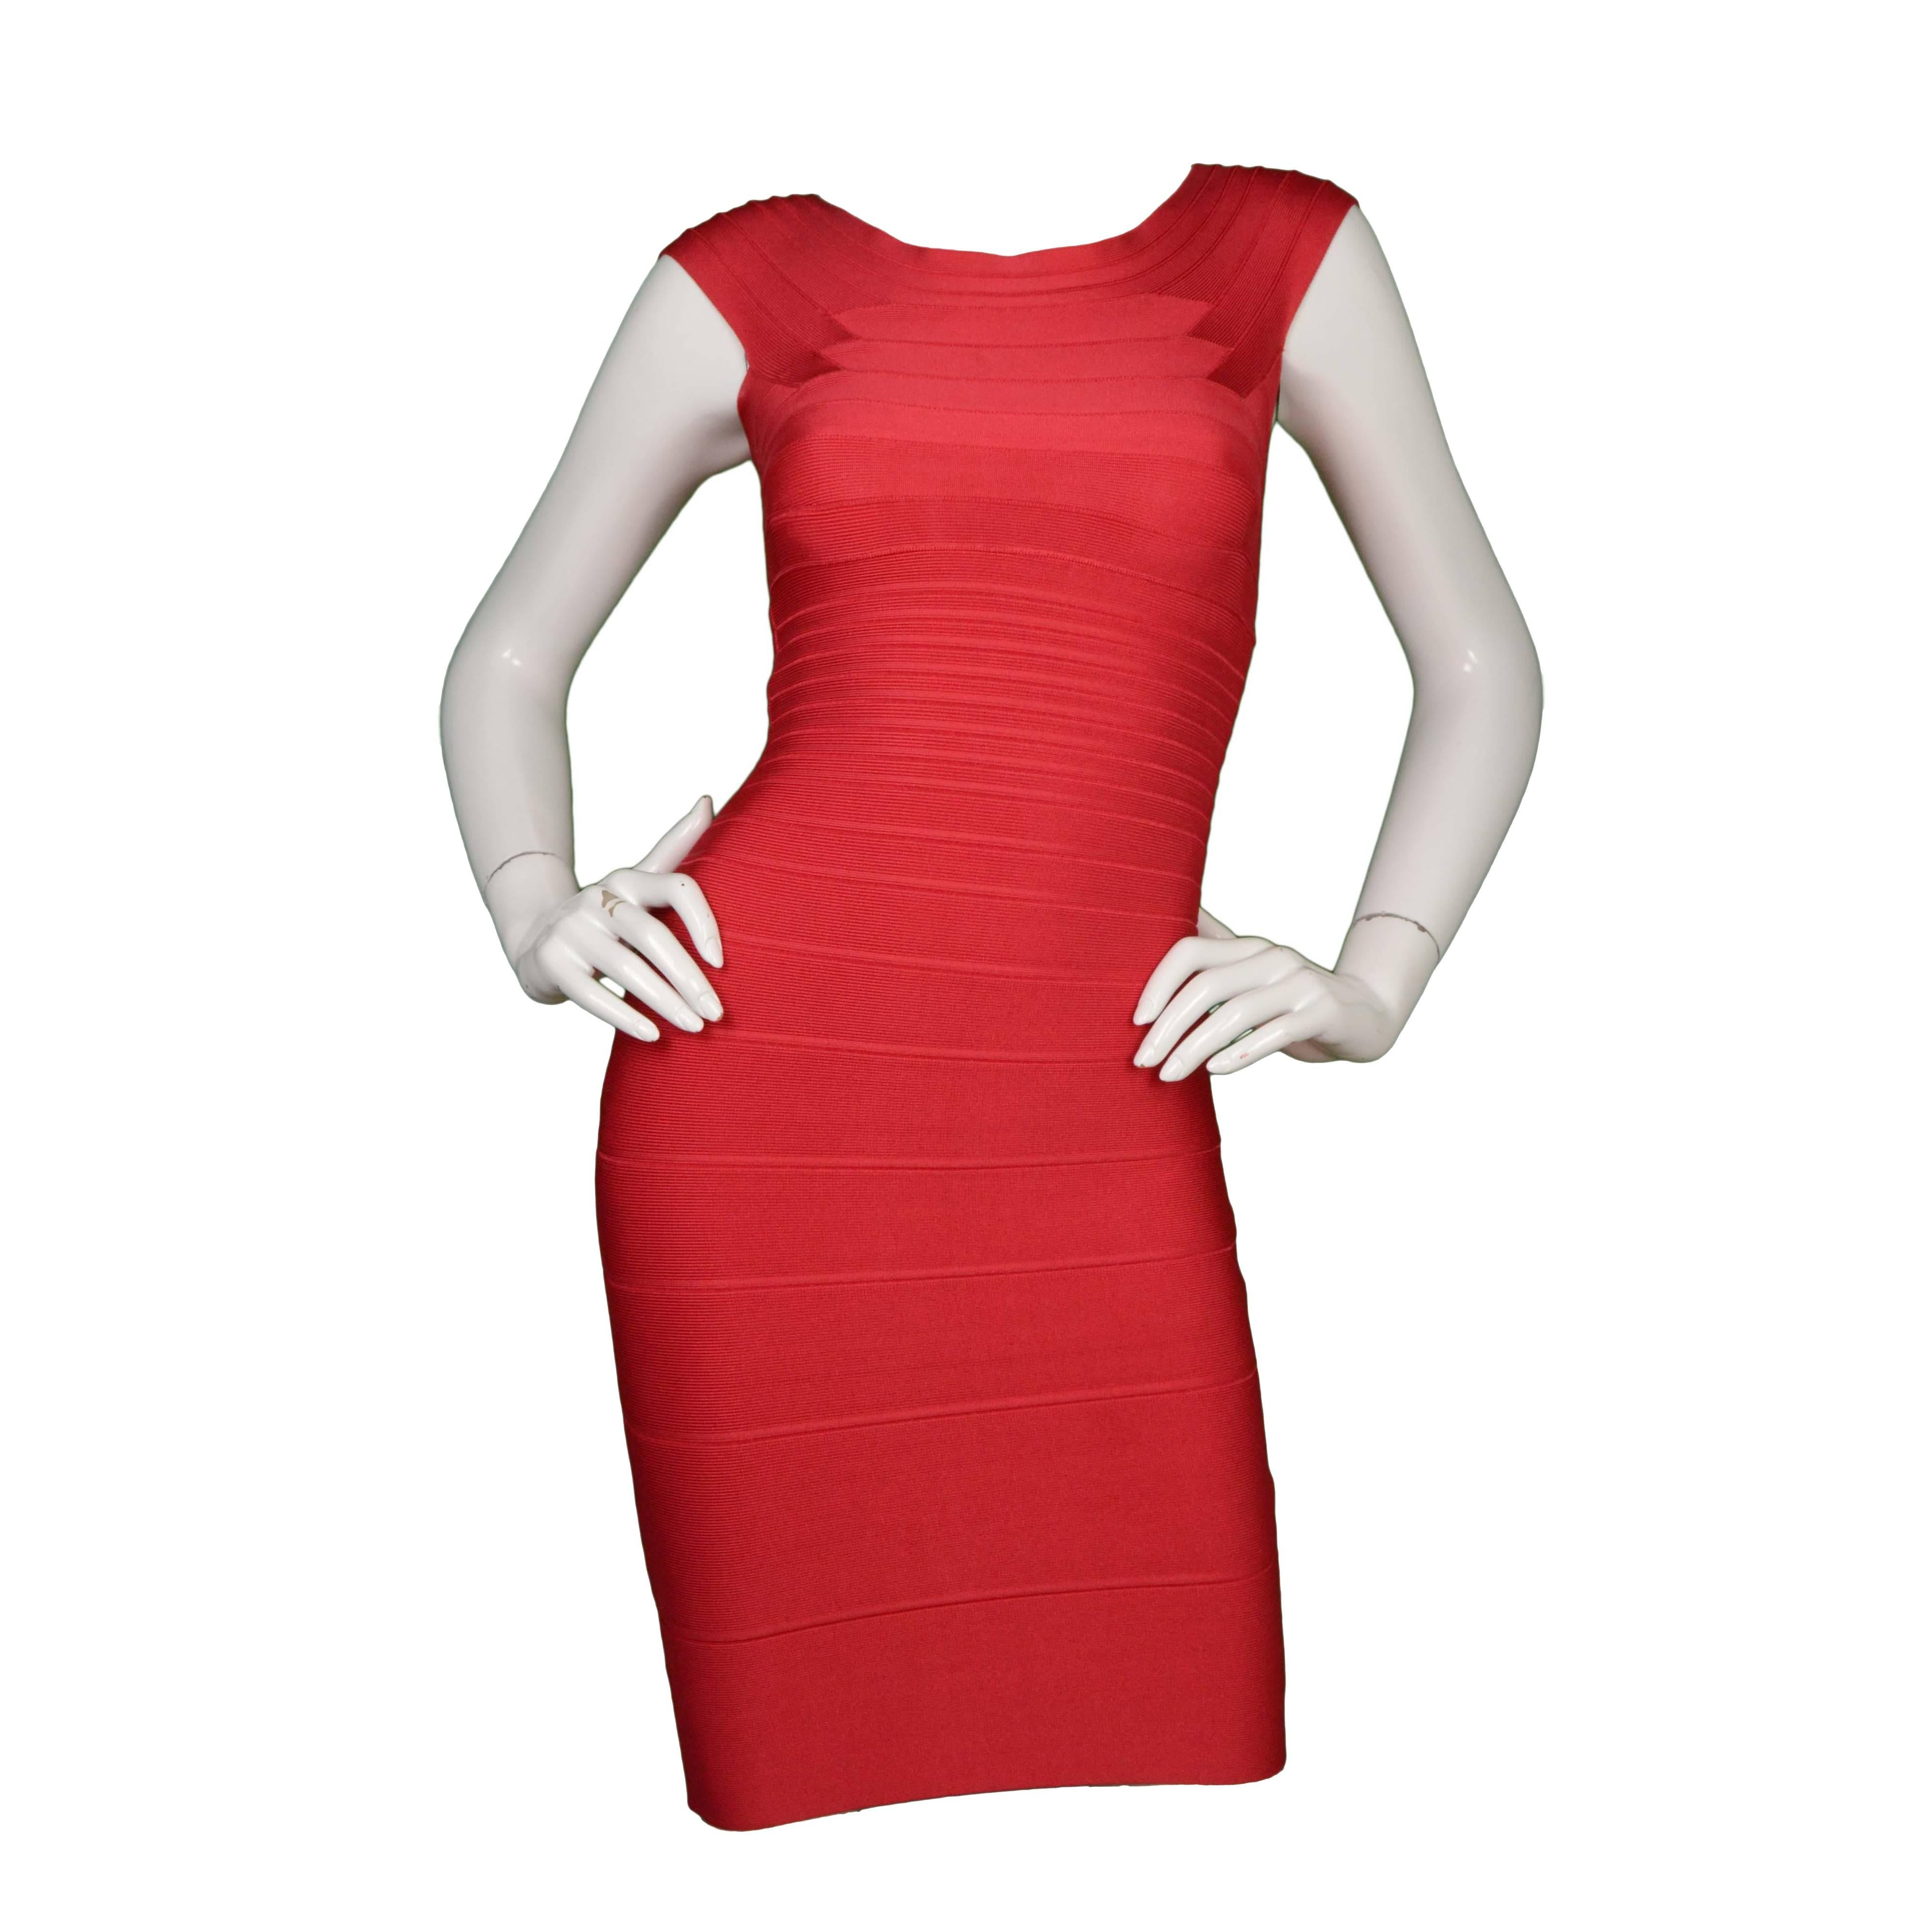 Herve Leger Red Off-The-Shoulder Bandage Dress sz XXS